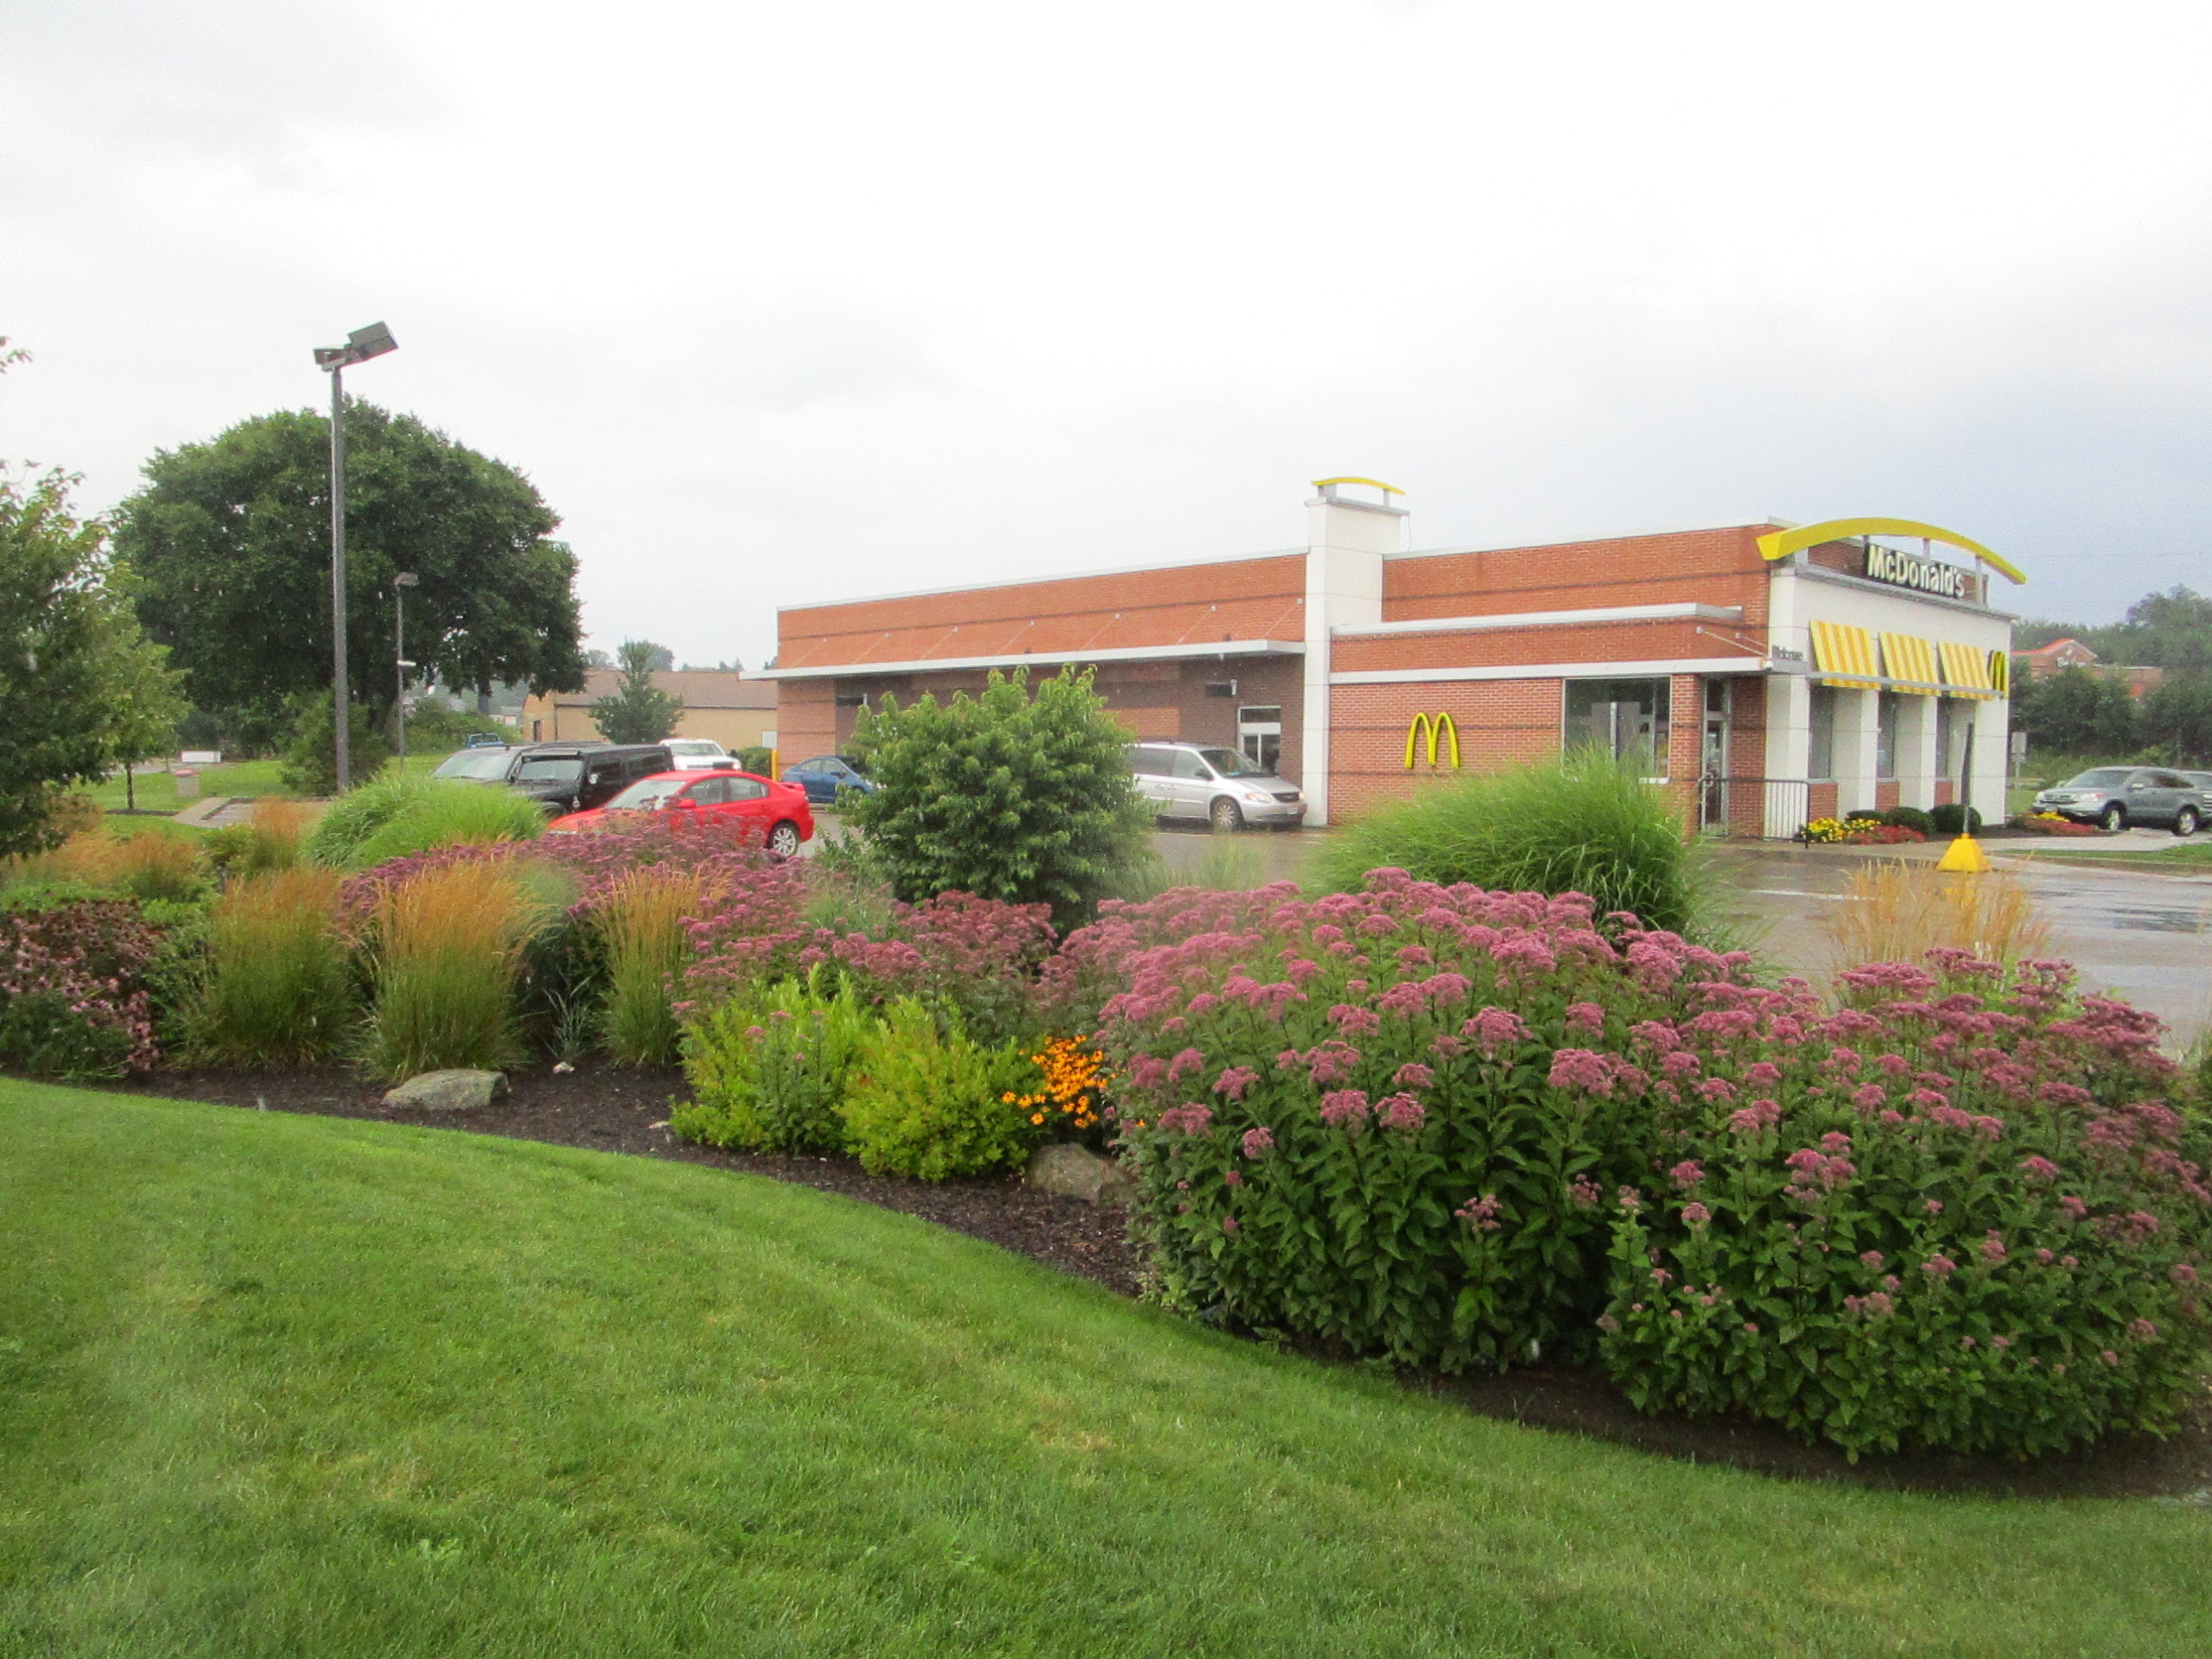 McDonalds commercial landscaping design